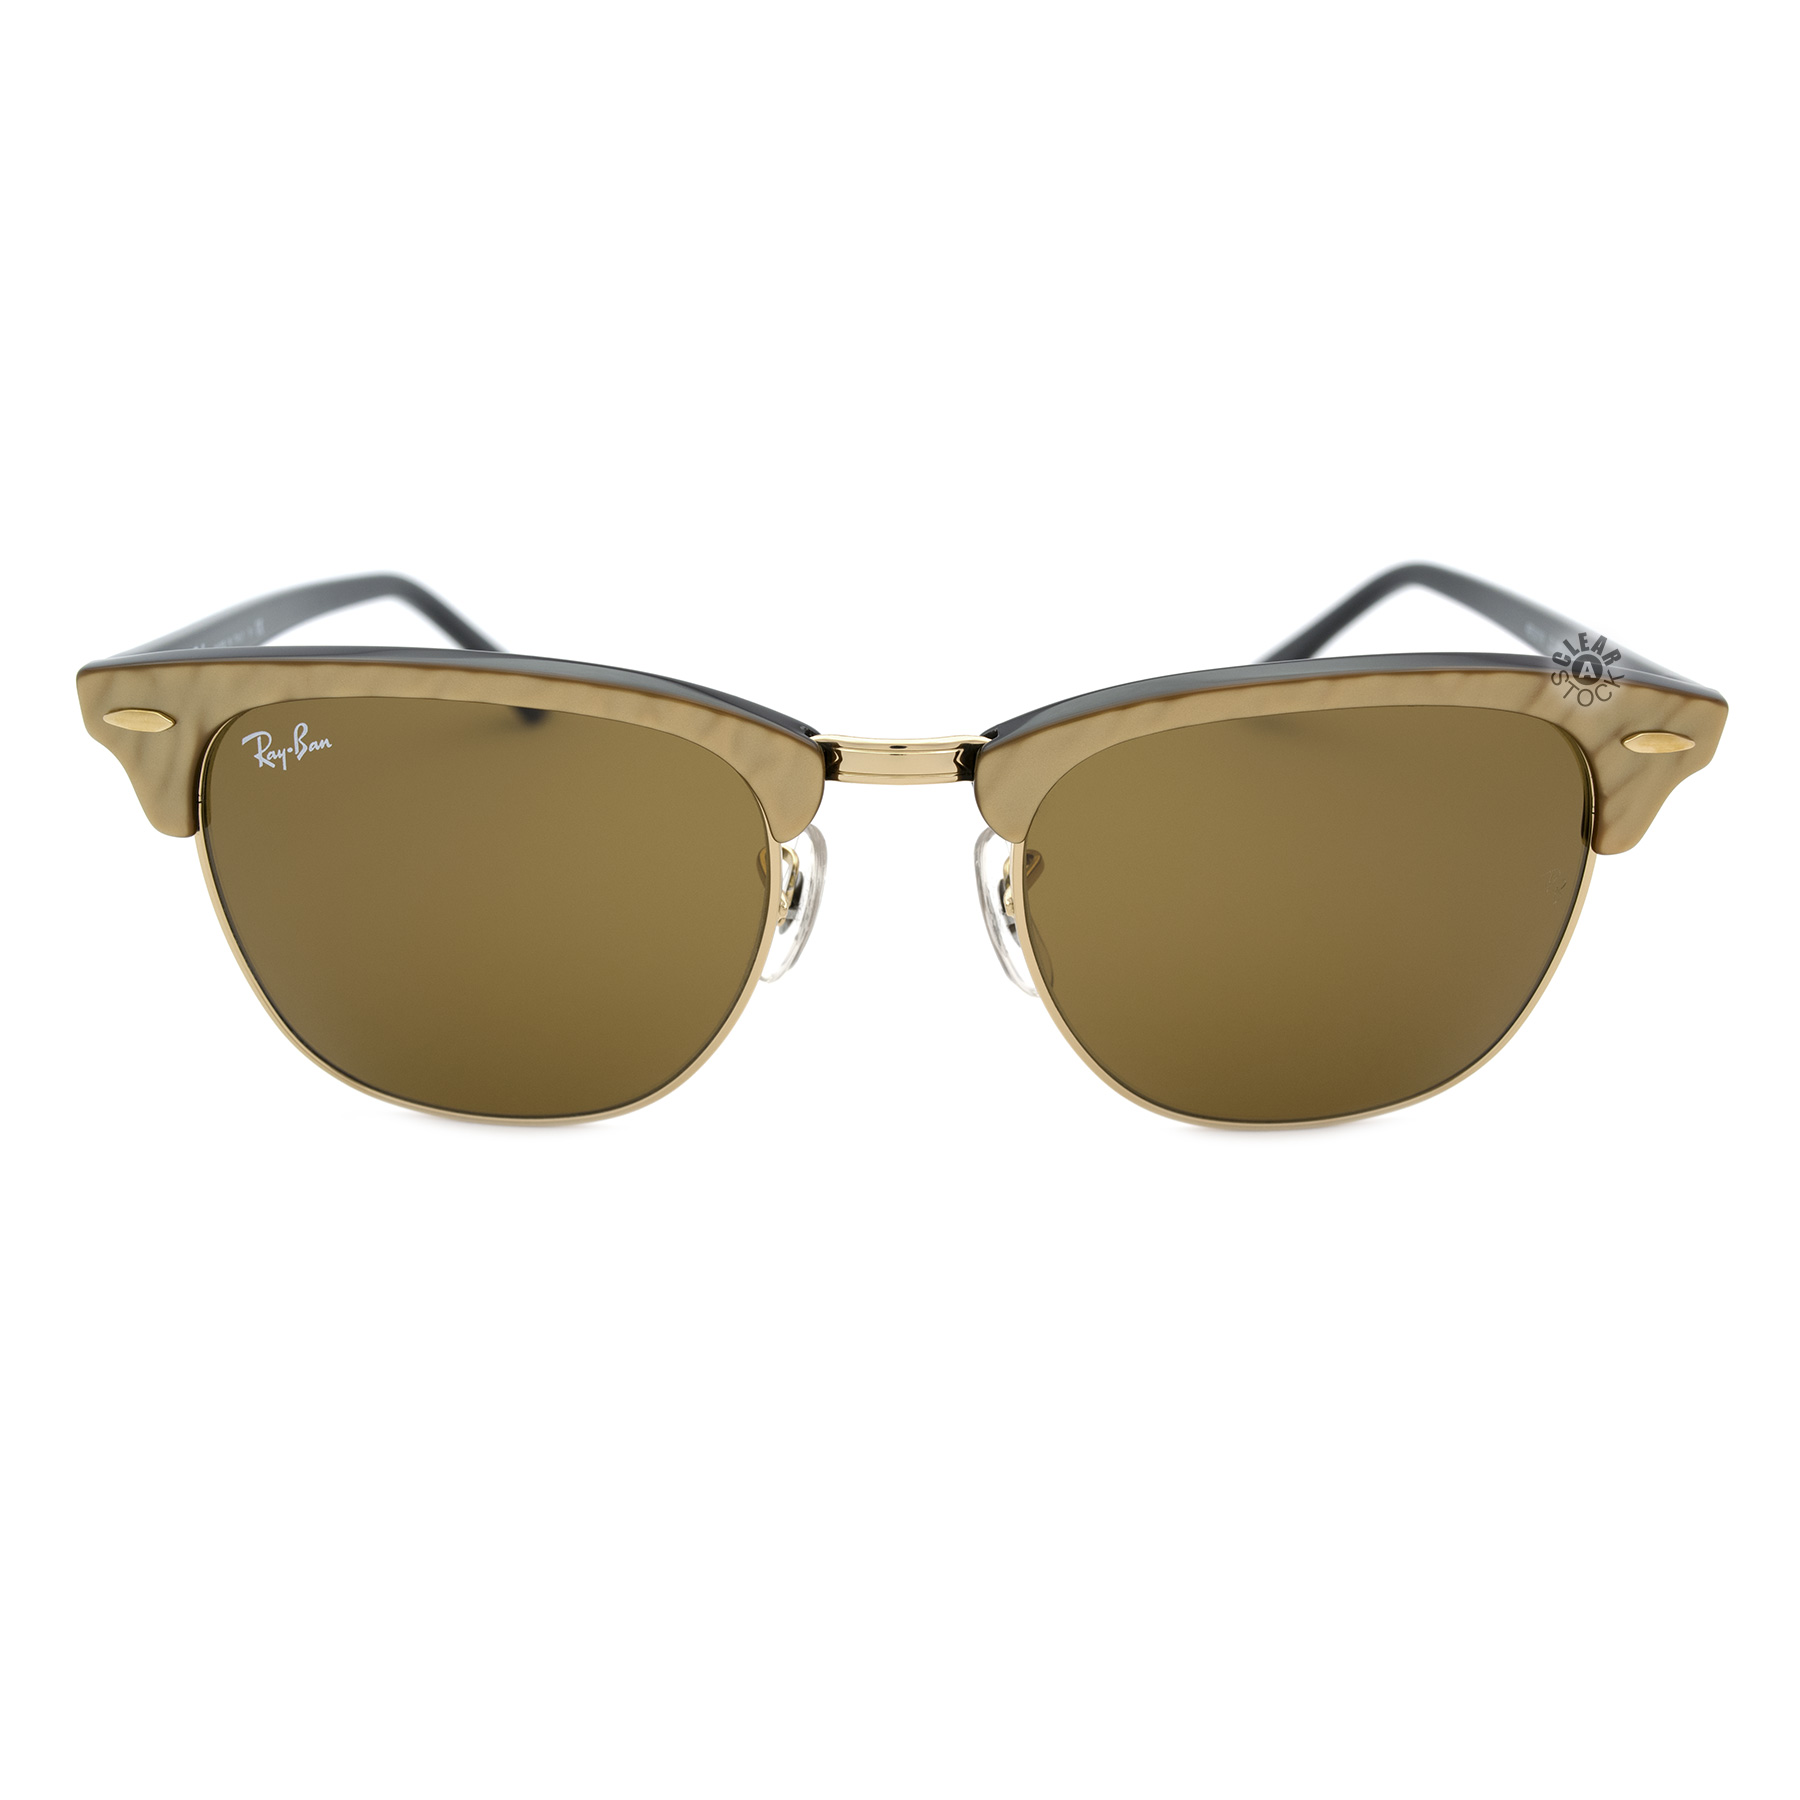 clubmaster 51mm sunglasses